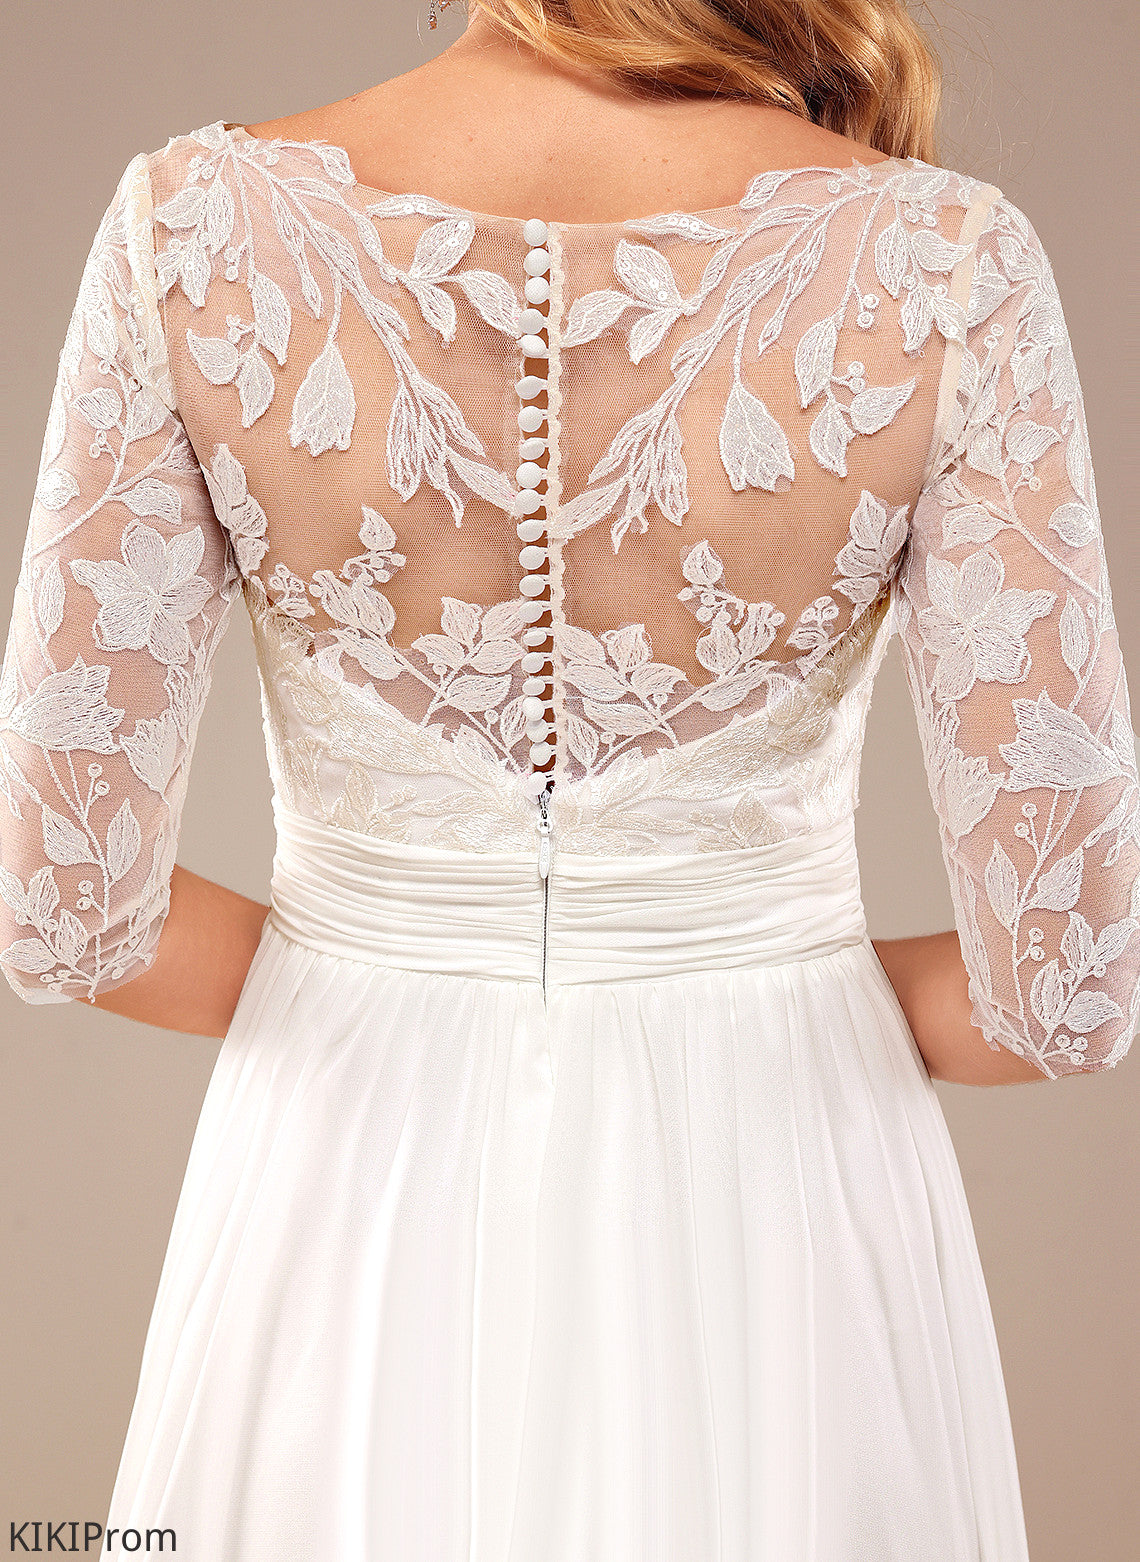 Sequins V-neck Floor-Length Maya Wedding Wedding Dresses Lace With Chiffon A-Line Dress Ruffle